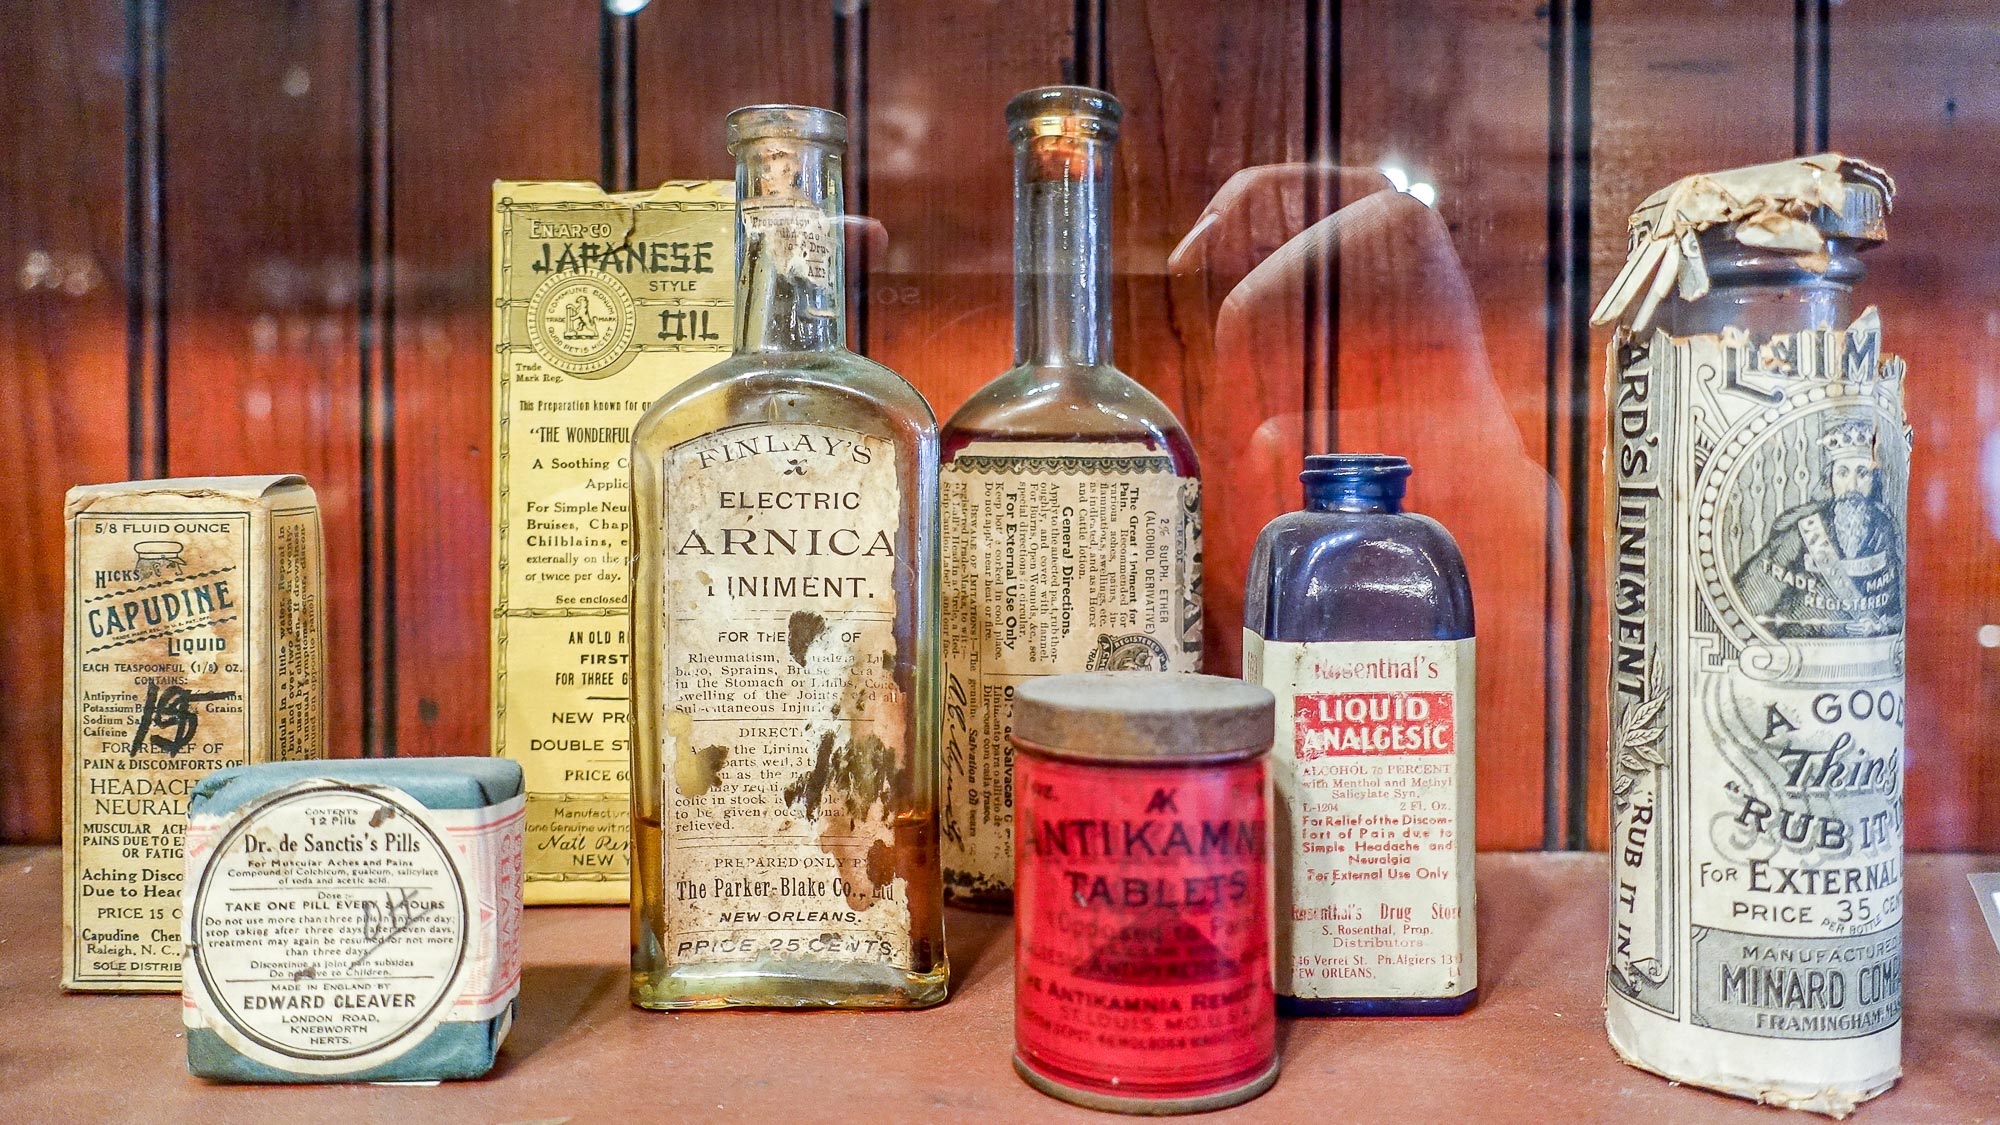 New Orleans Pharmacy Museum